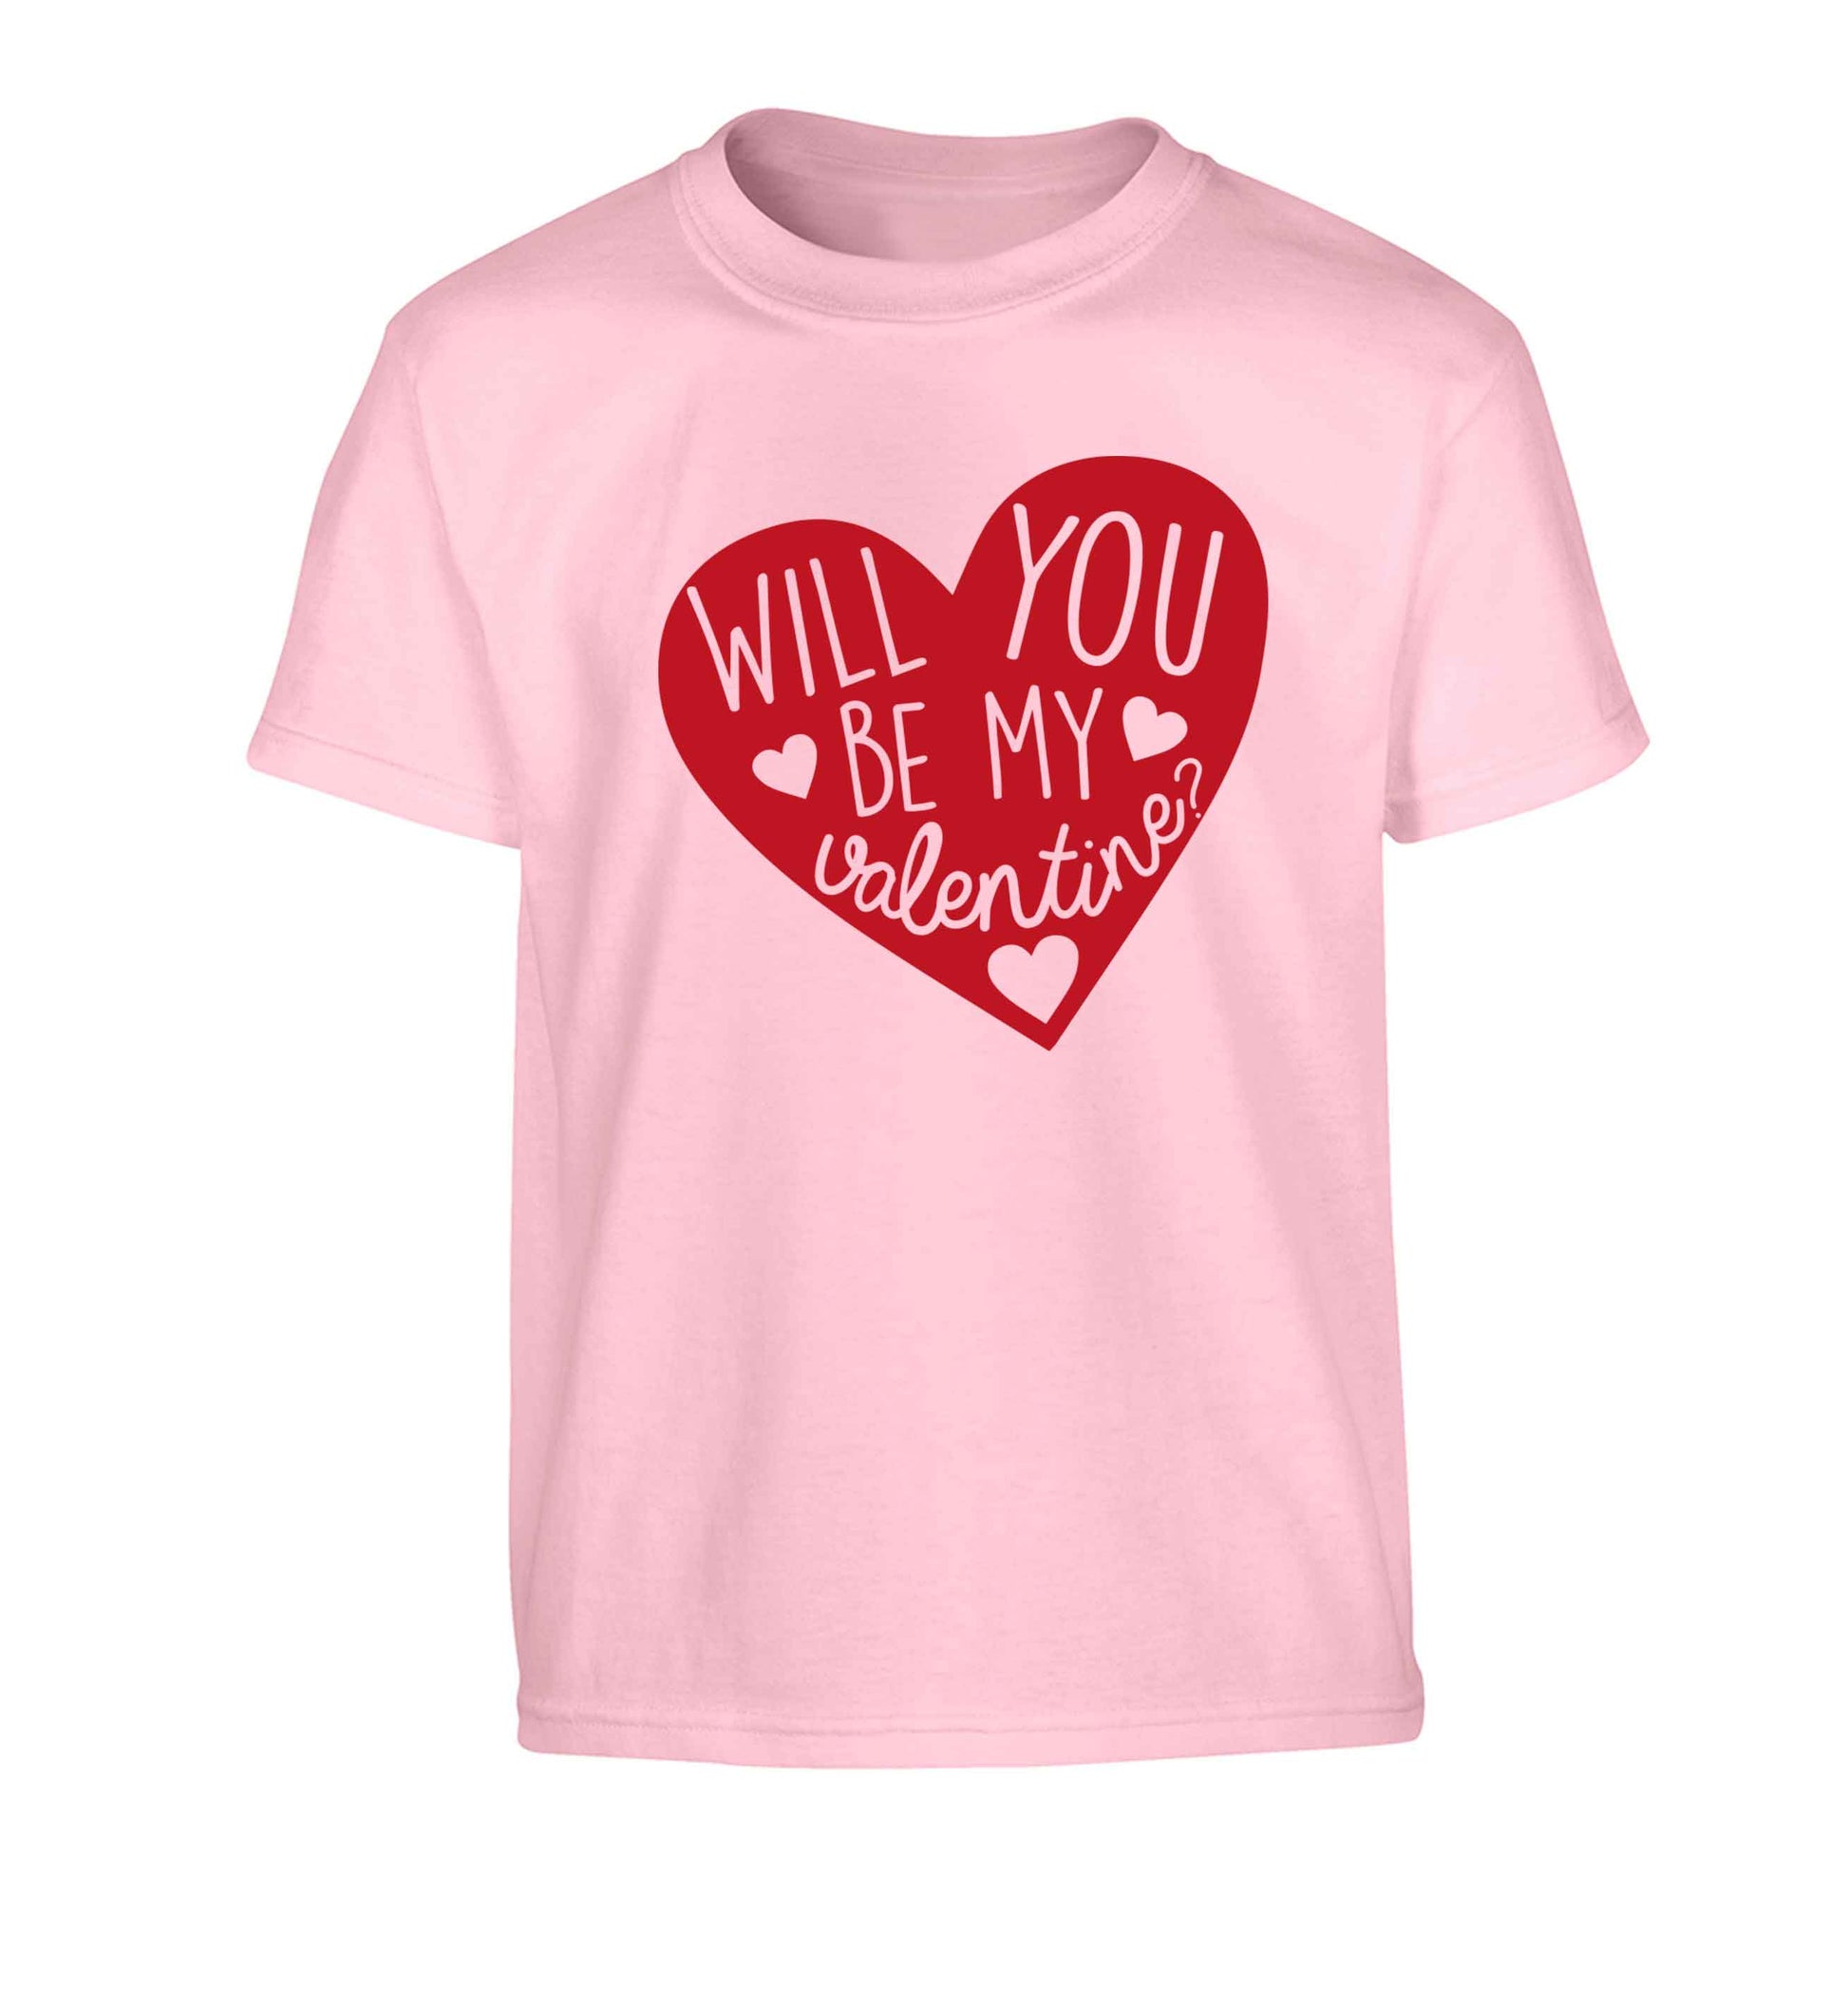 Will you be my valentine? Children's light pink Tshirt 12-13 Years